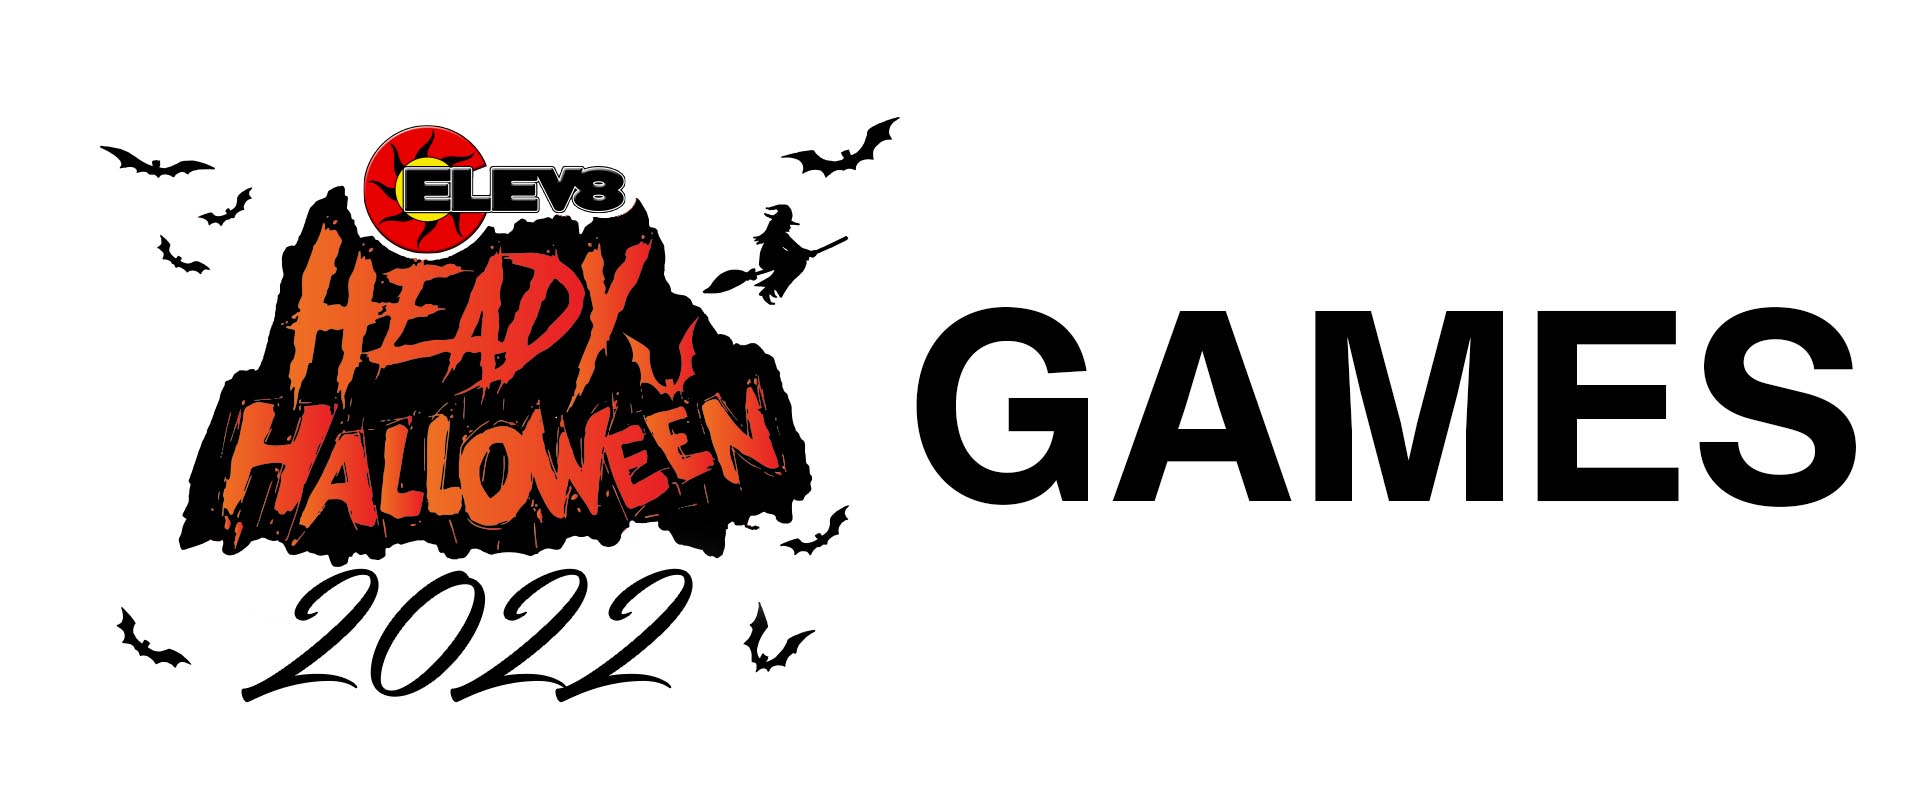 heady-halloween-games.jpg